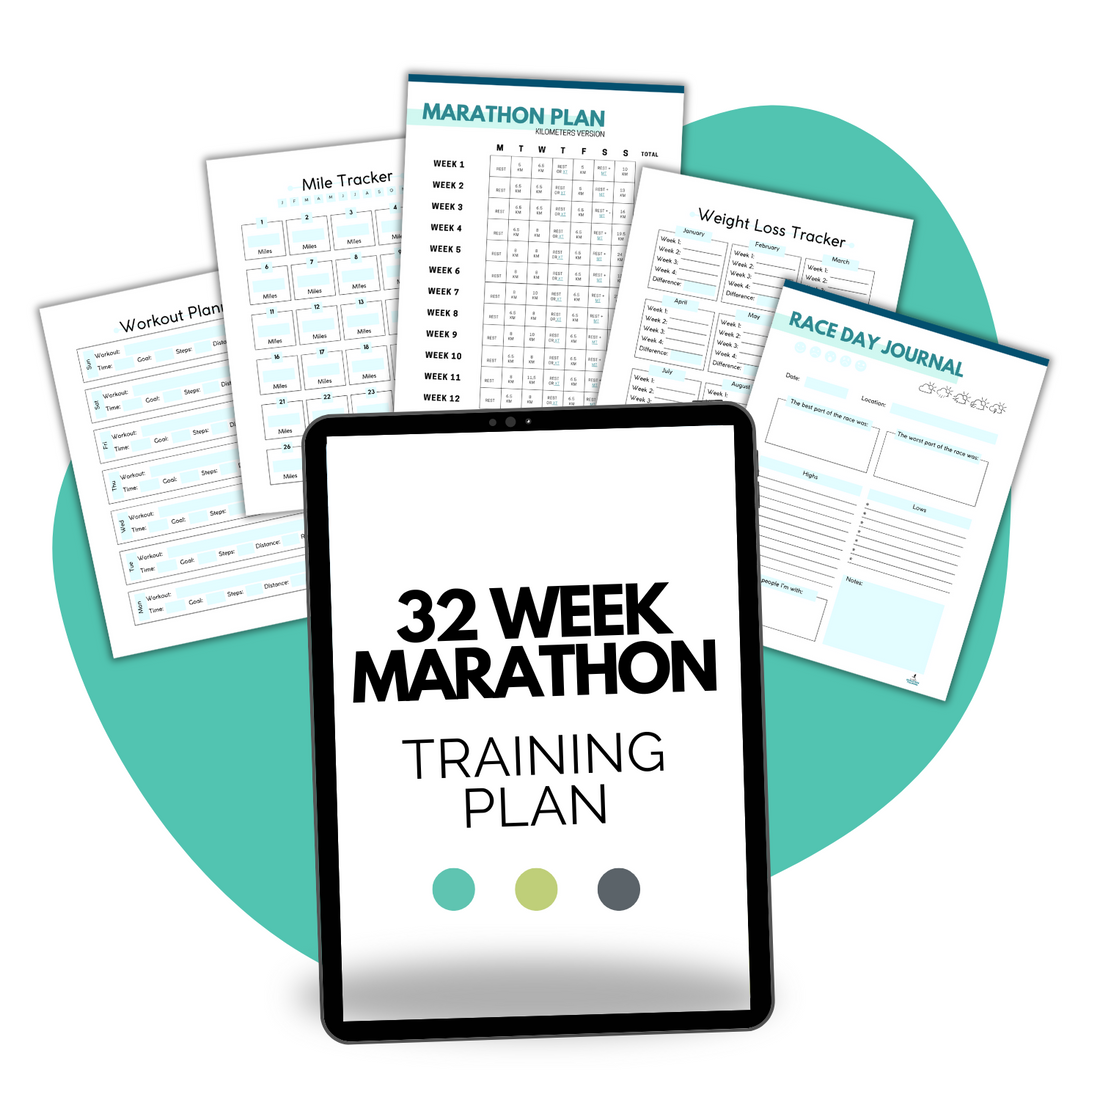 32 Week Marathon Training Schedule Plan Mockup